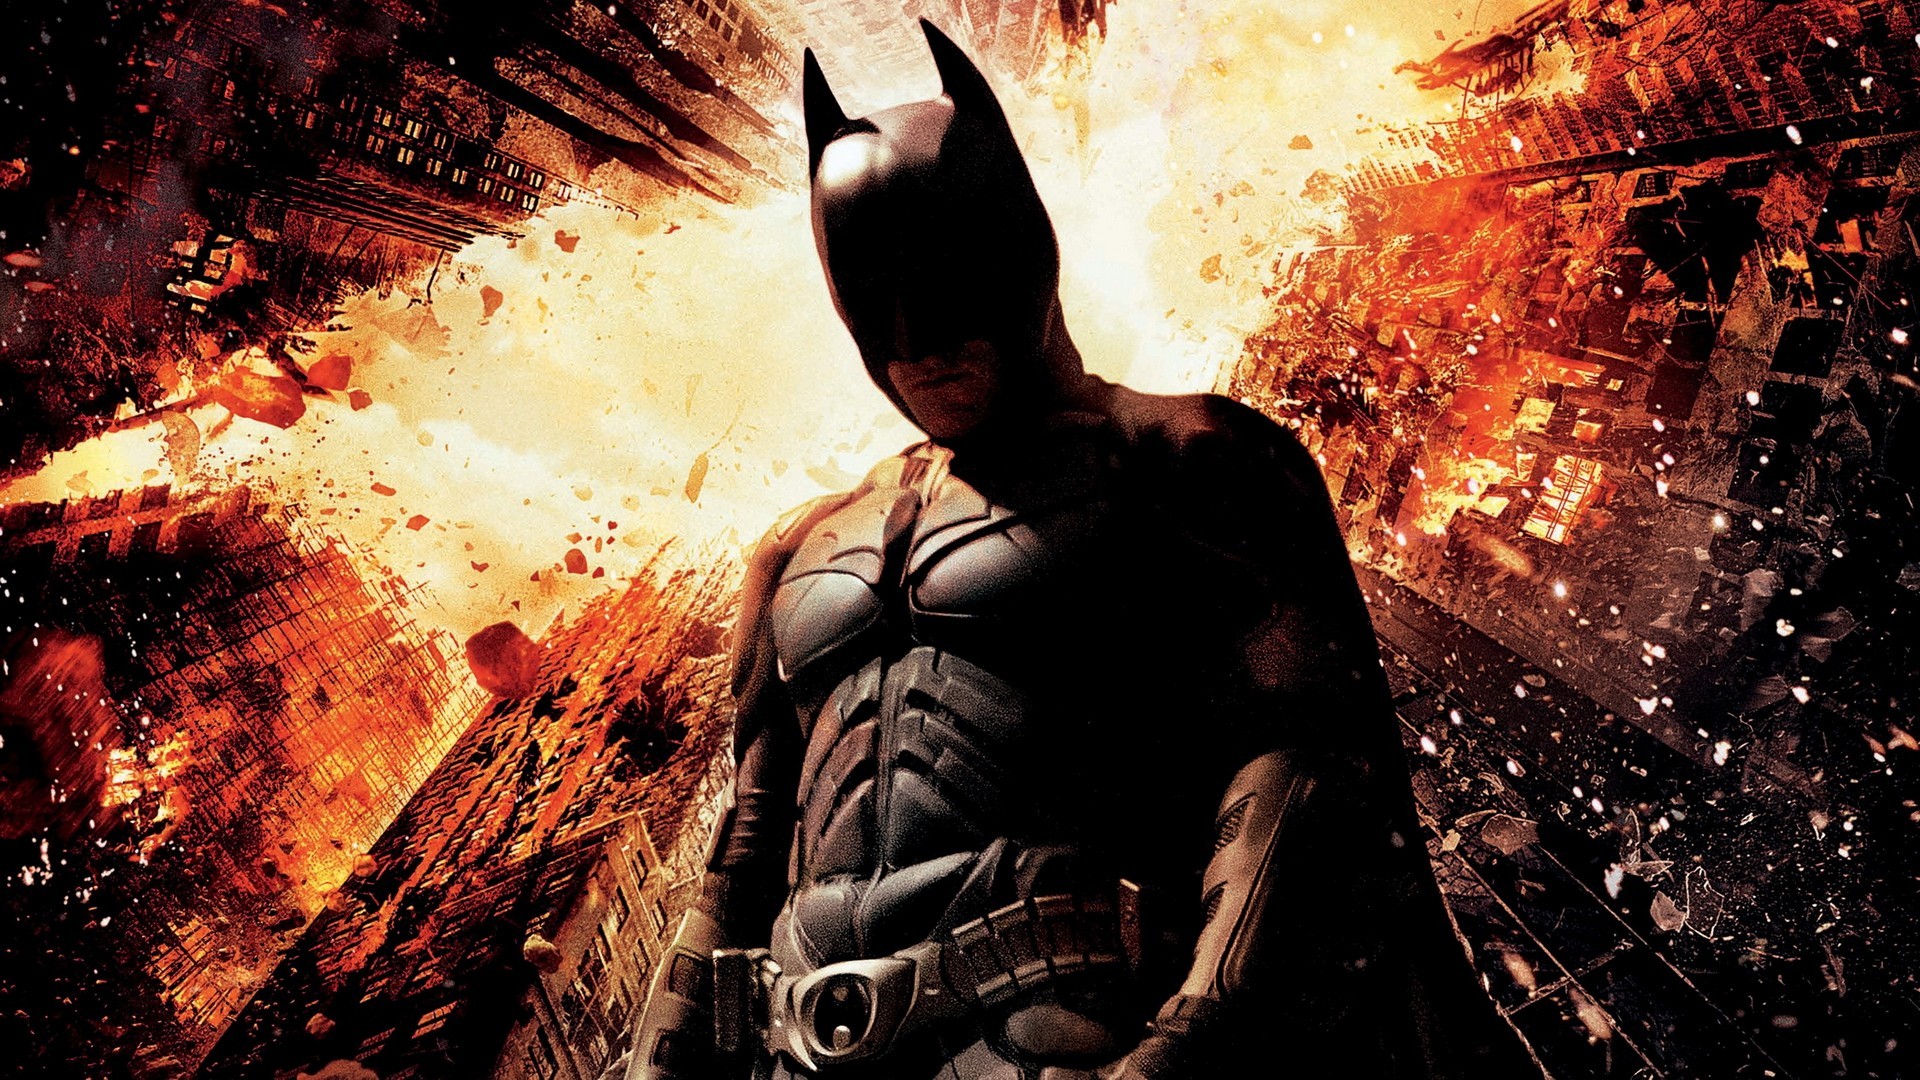 General 1920x1080 movies The Dark Knight Rises Batman Christian Bale actor superhero DC Comics Warner Brothers Christopher Nolan